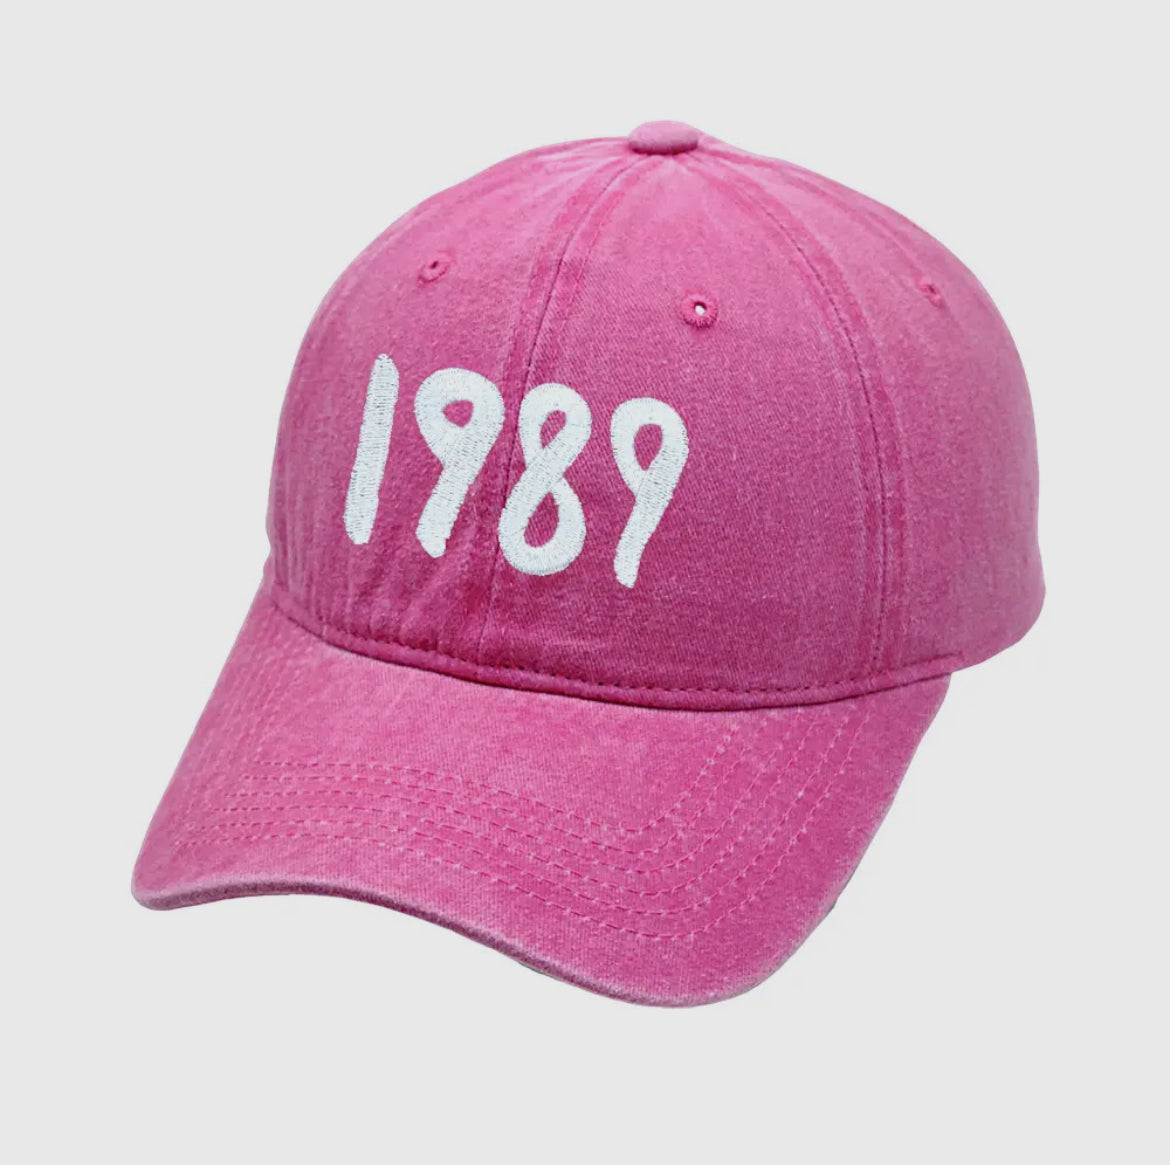 TS “1989” Embroidered Baseball Cap